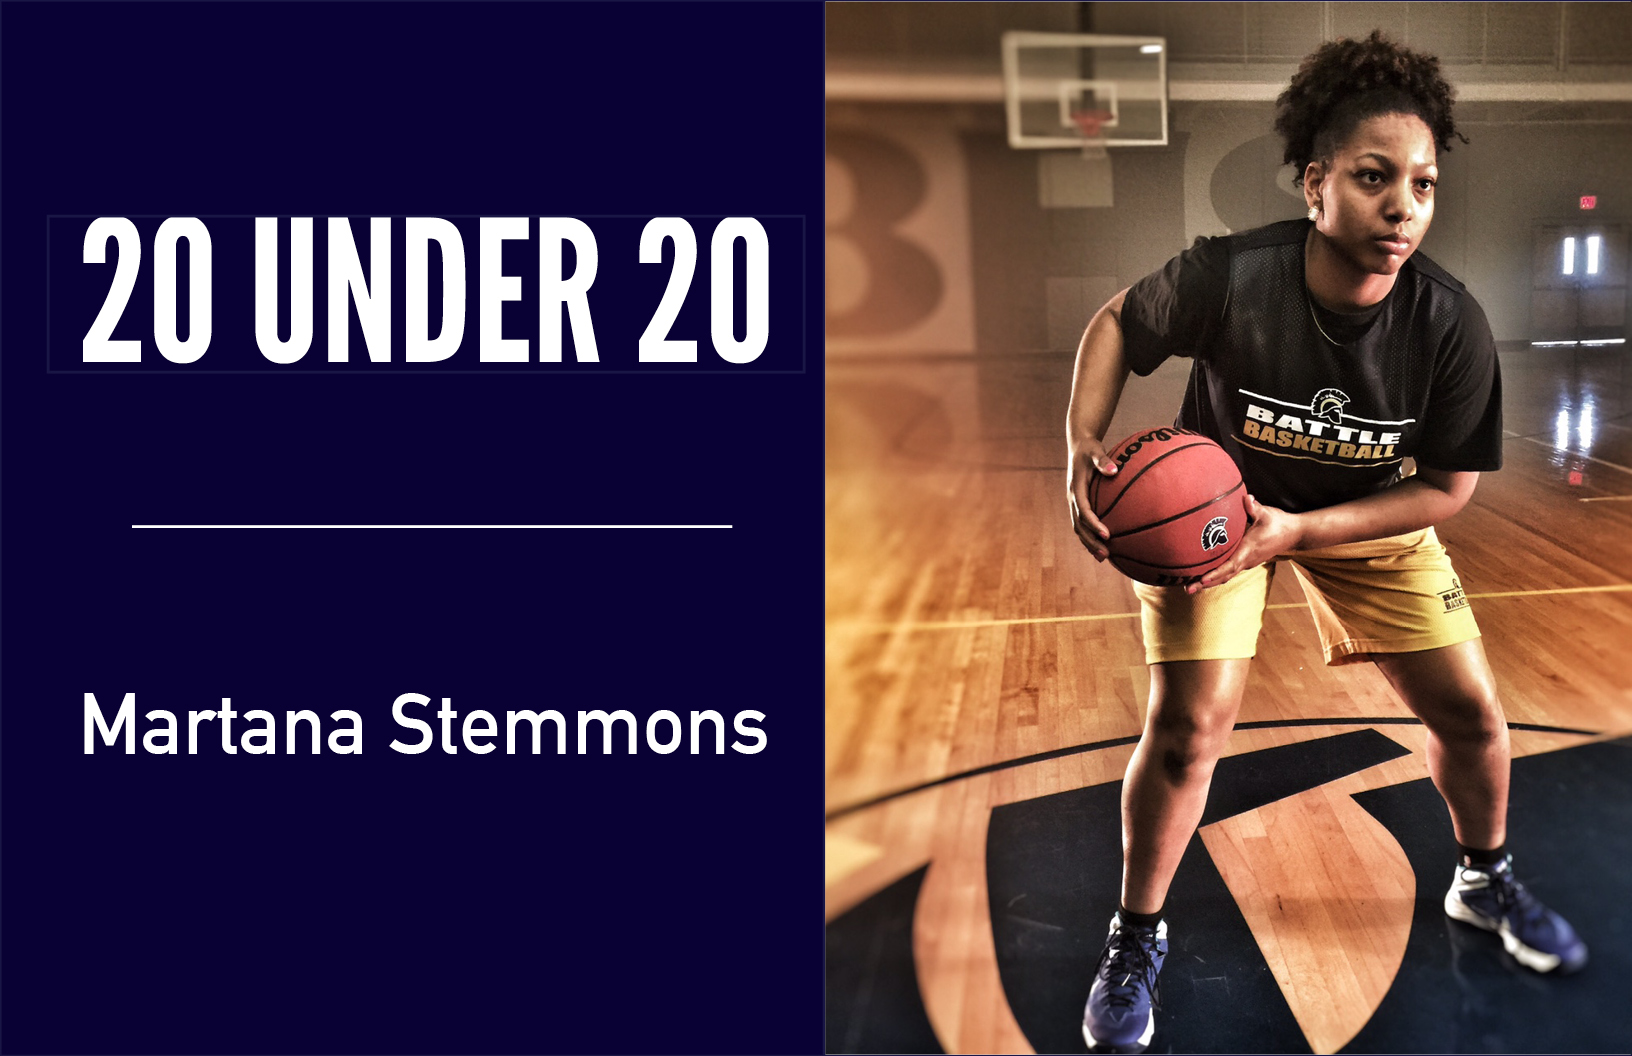 Martana-Stemmons-20-under-20